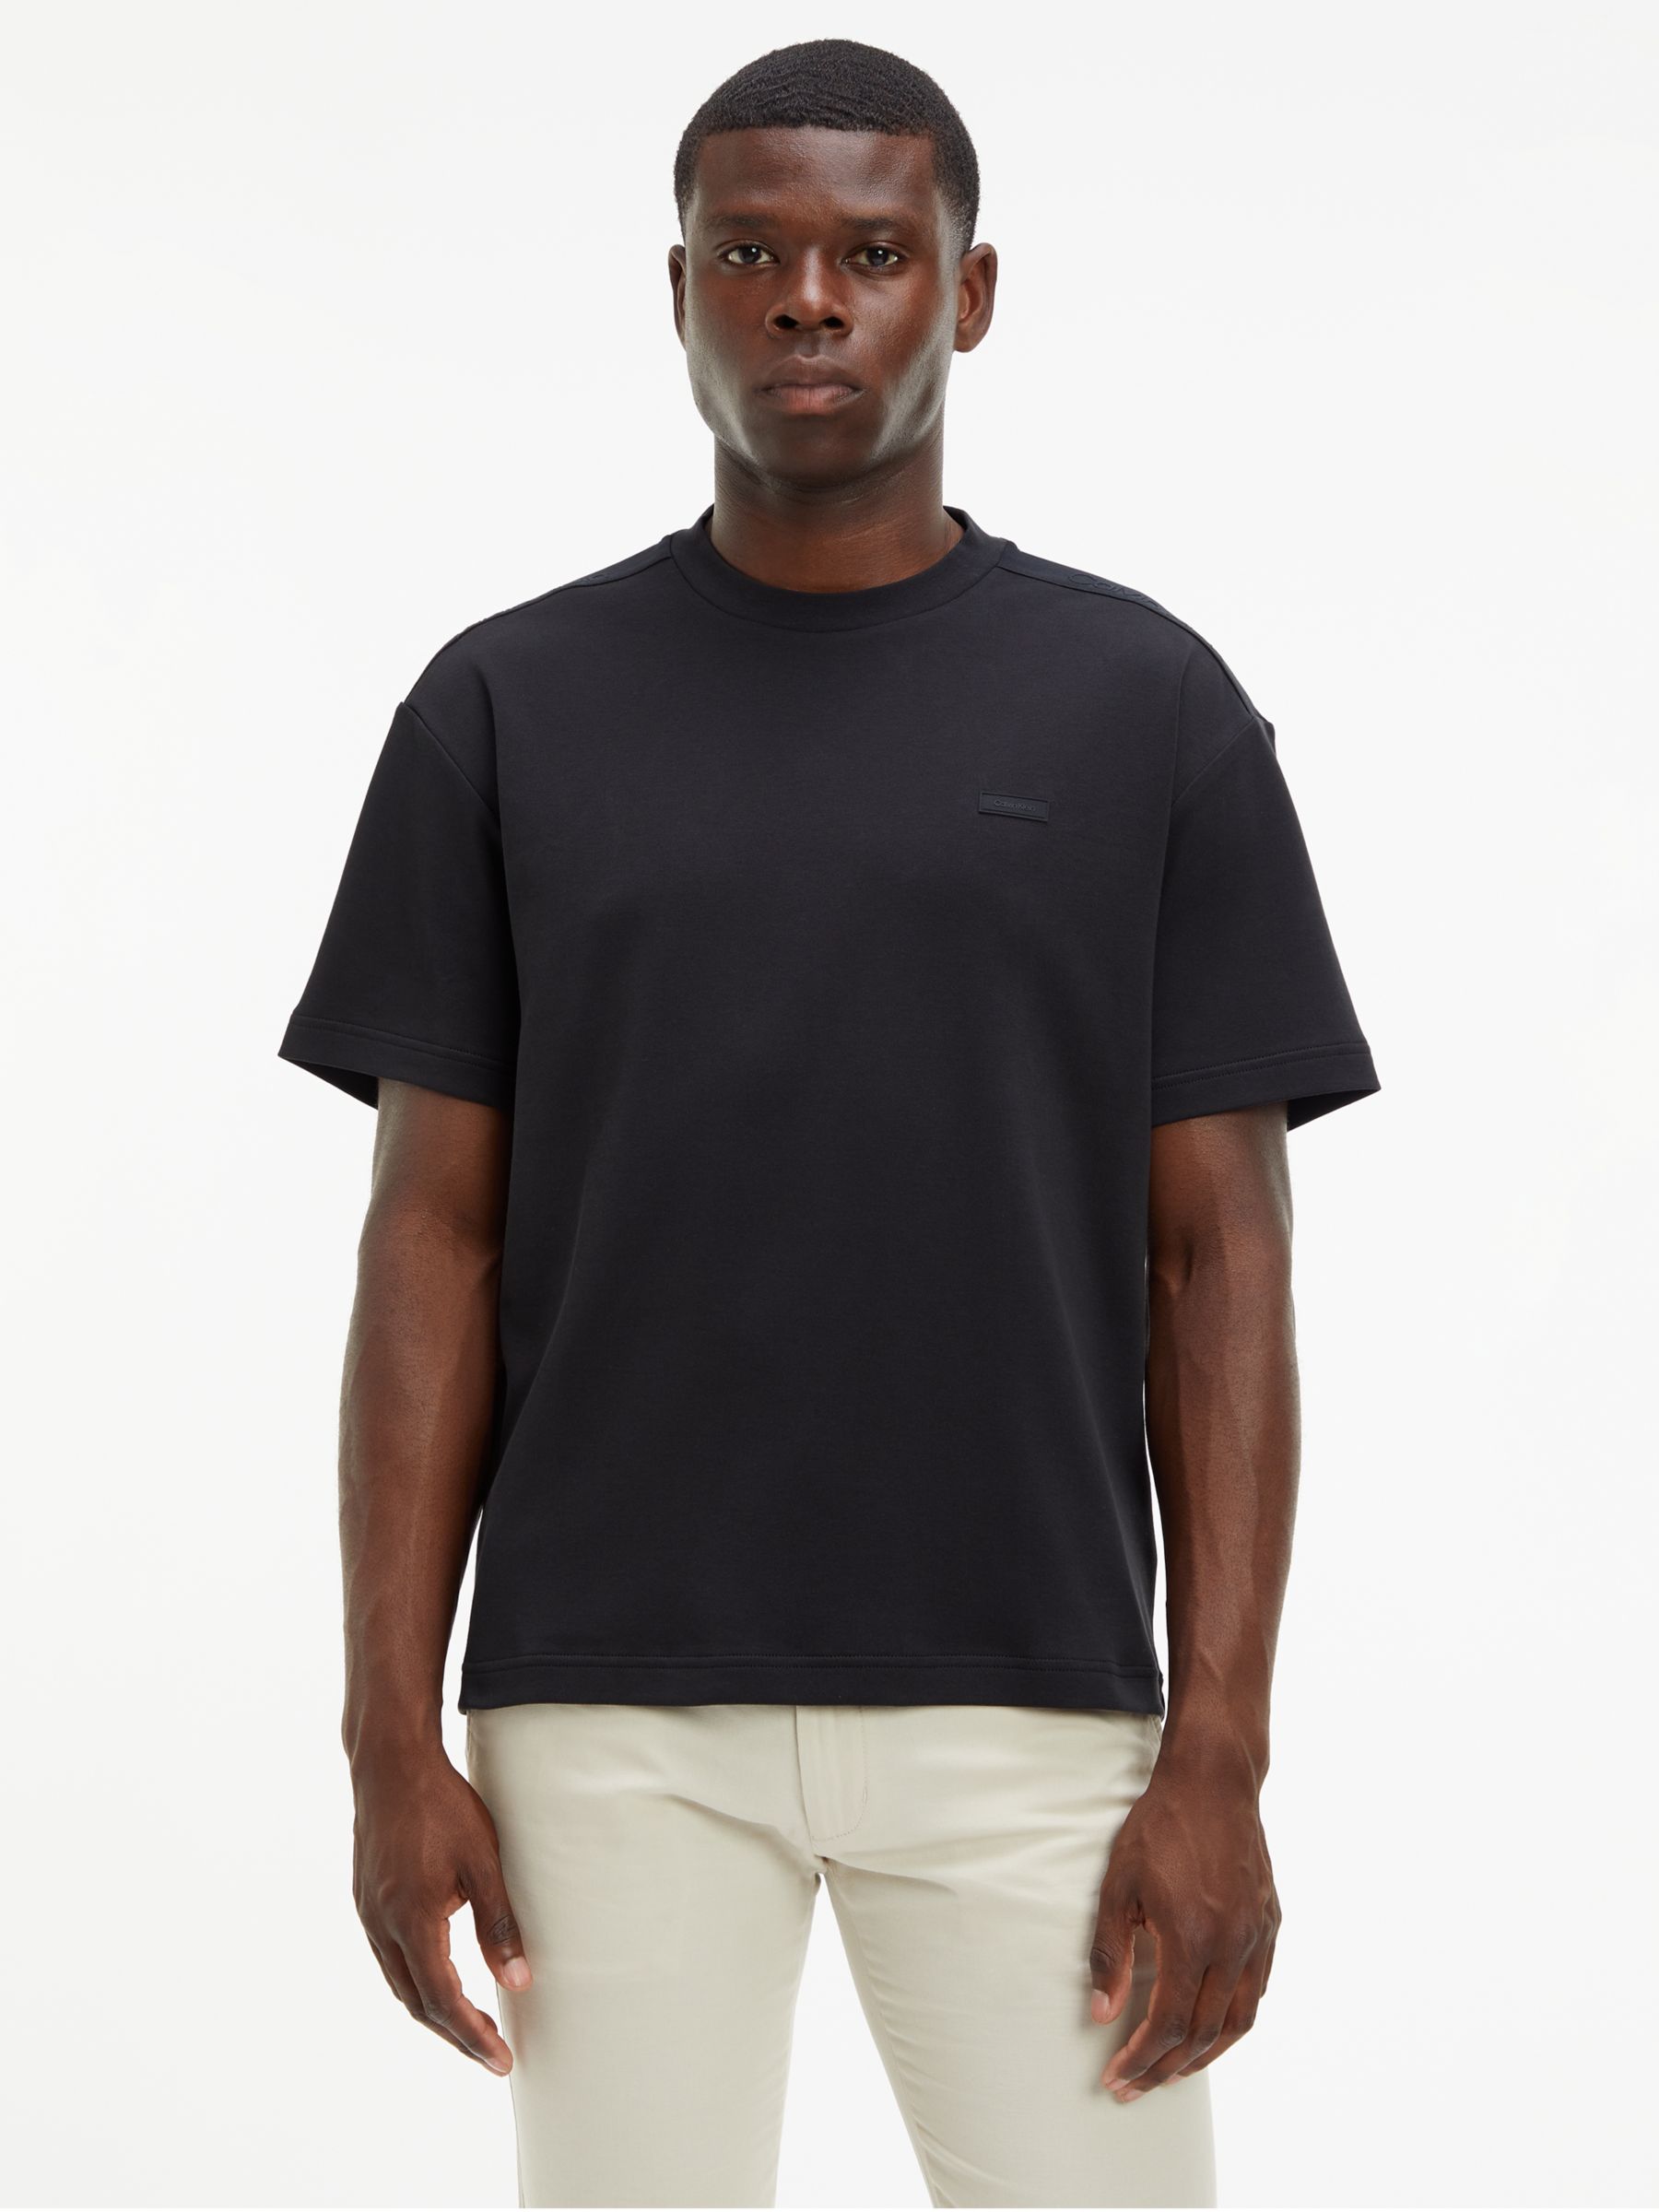 Calvin Klein Jeans Jacquard Logo T-Shirt, CK Black at John Lewis & Partners